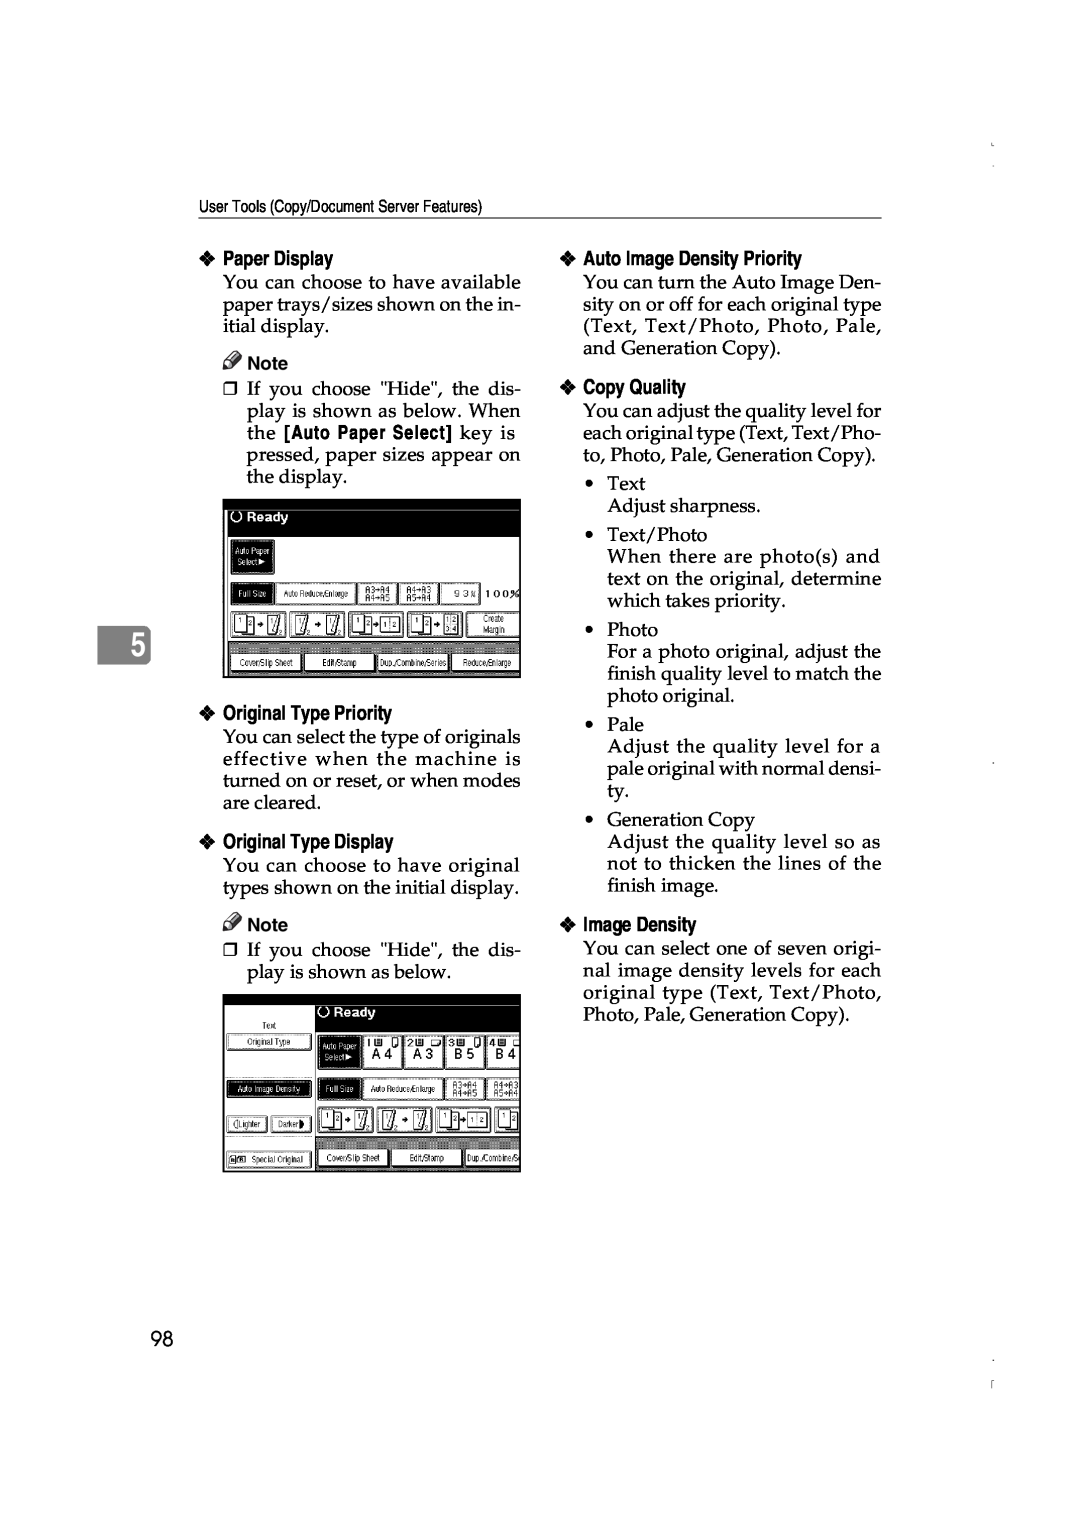 Lanier LD075 manual Paper Display, Original Type Priority, Original Type Display, Auto Image Density Priority, Copy Quality 